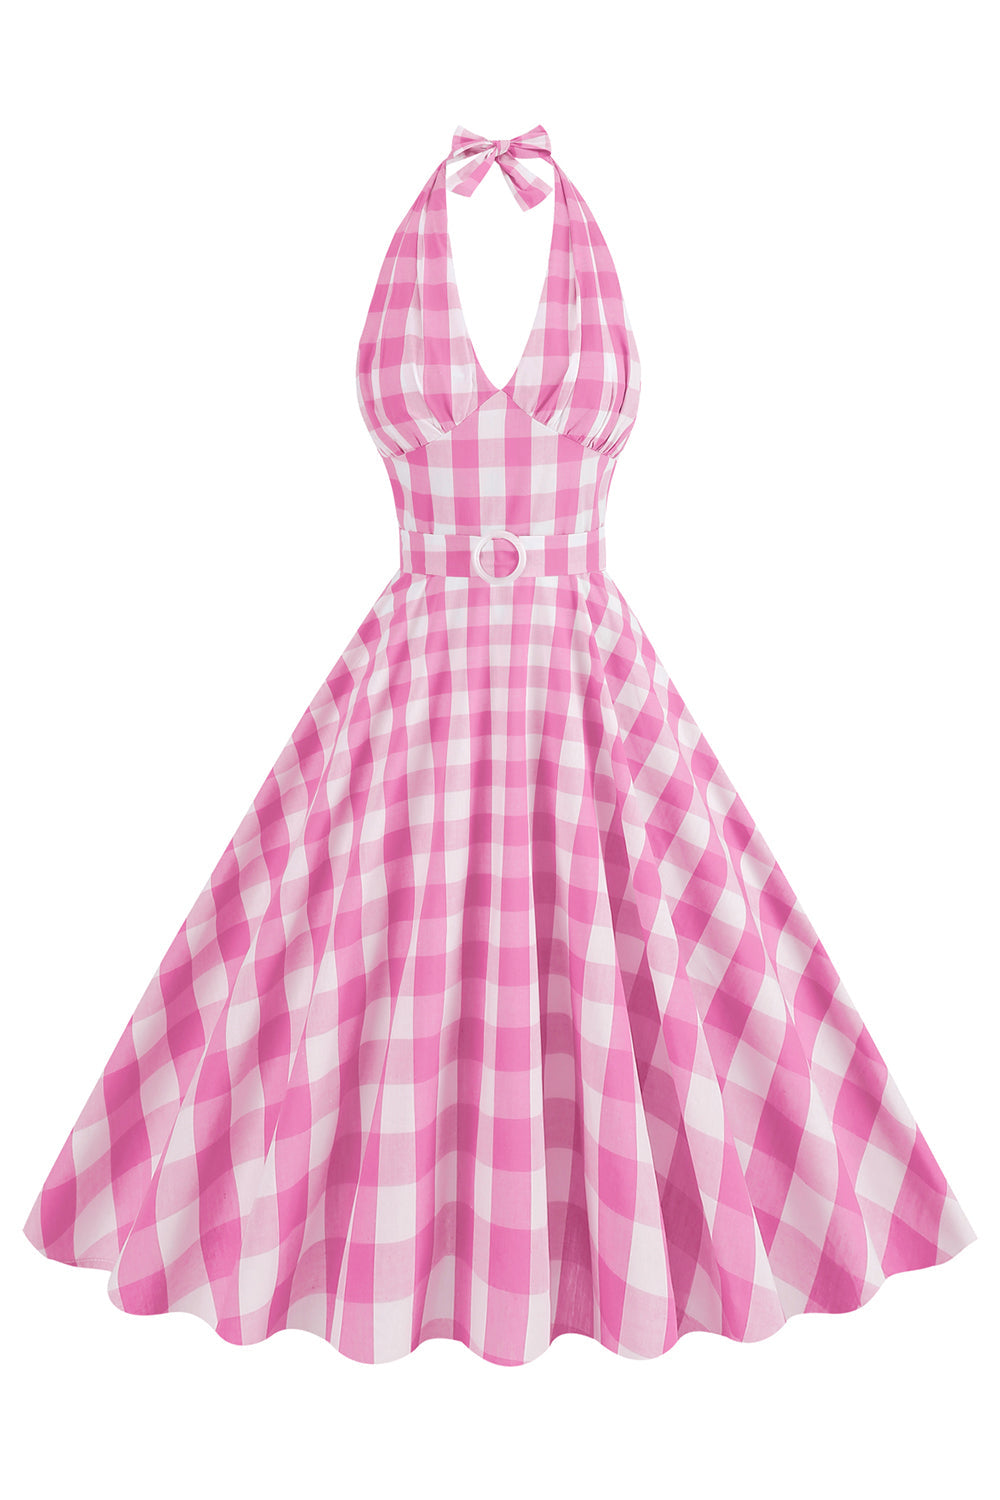 Pink Halter Plaid Sleeveless 1950s Dress With Belt